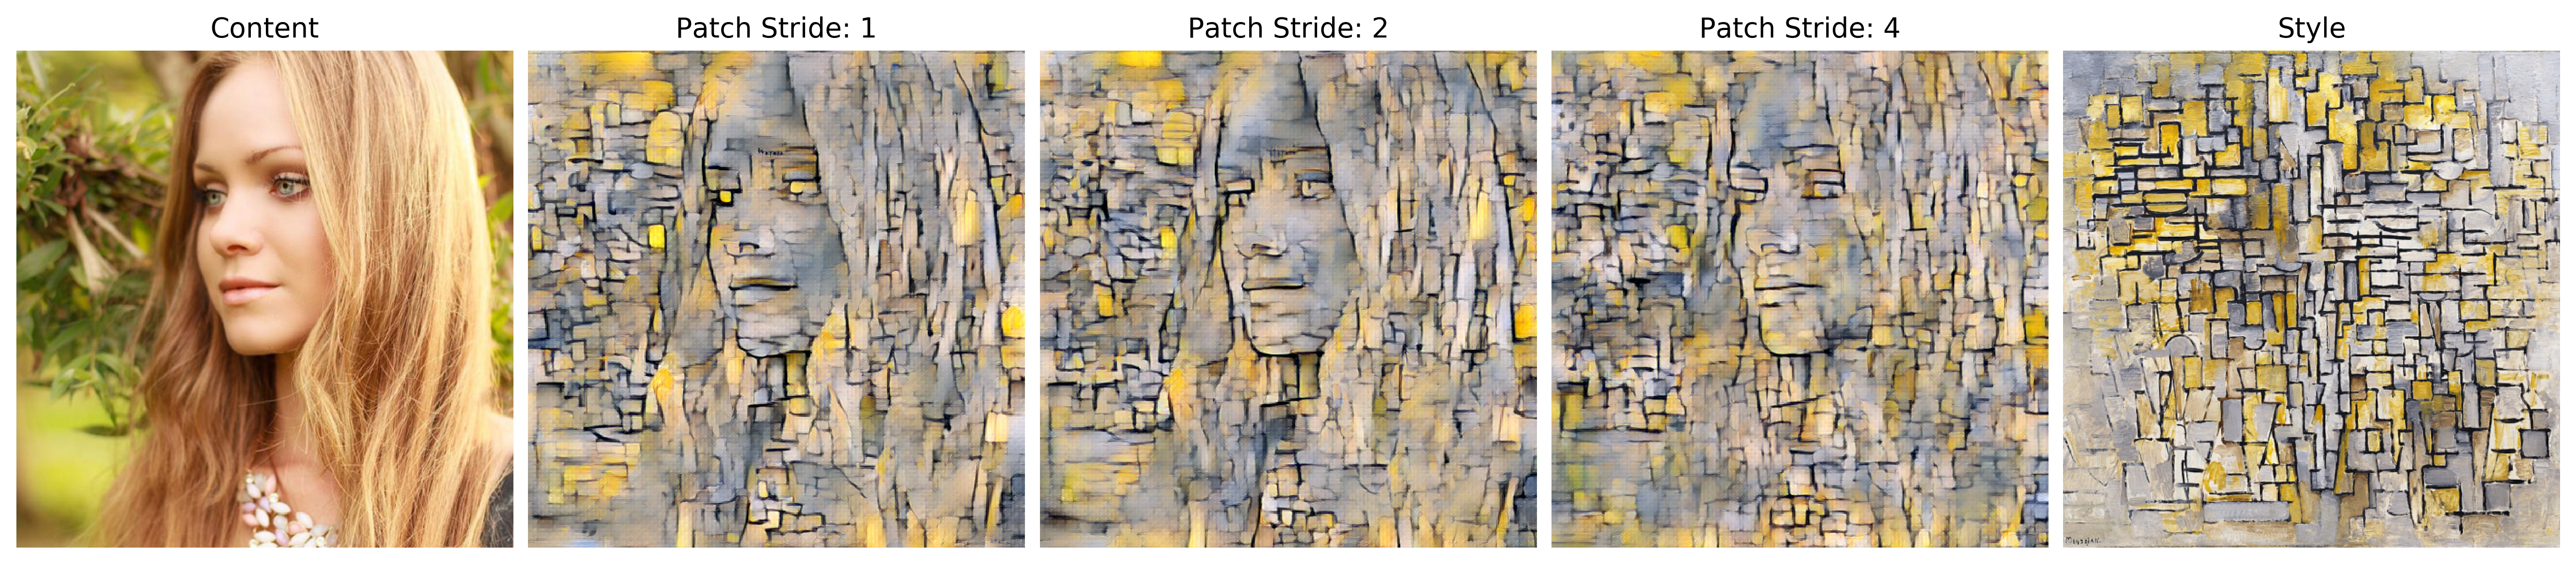 patch_stride_variation